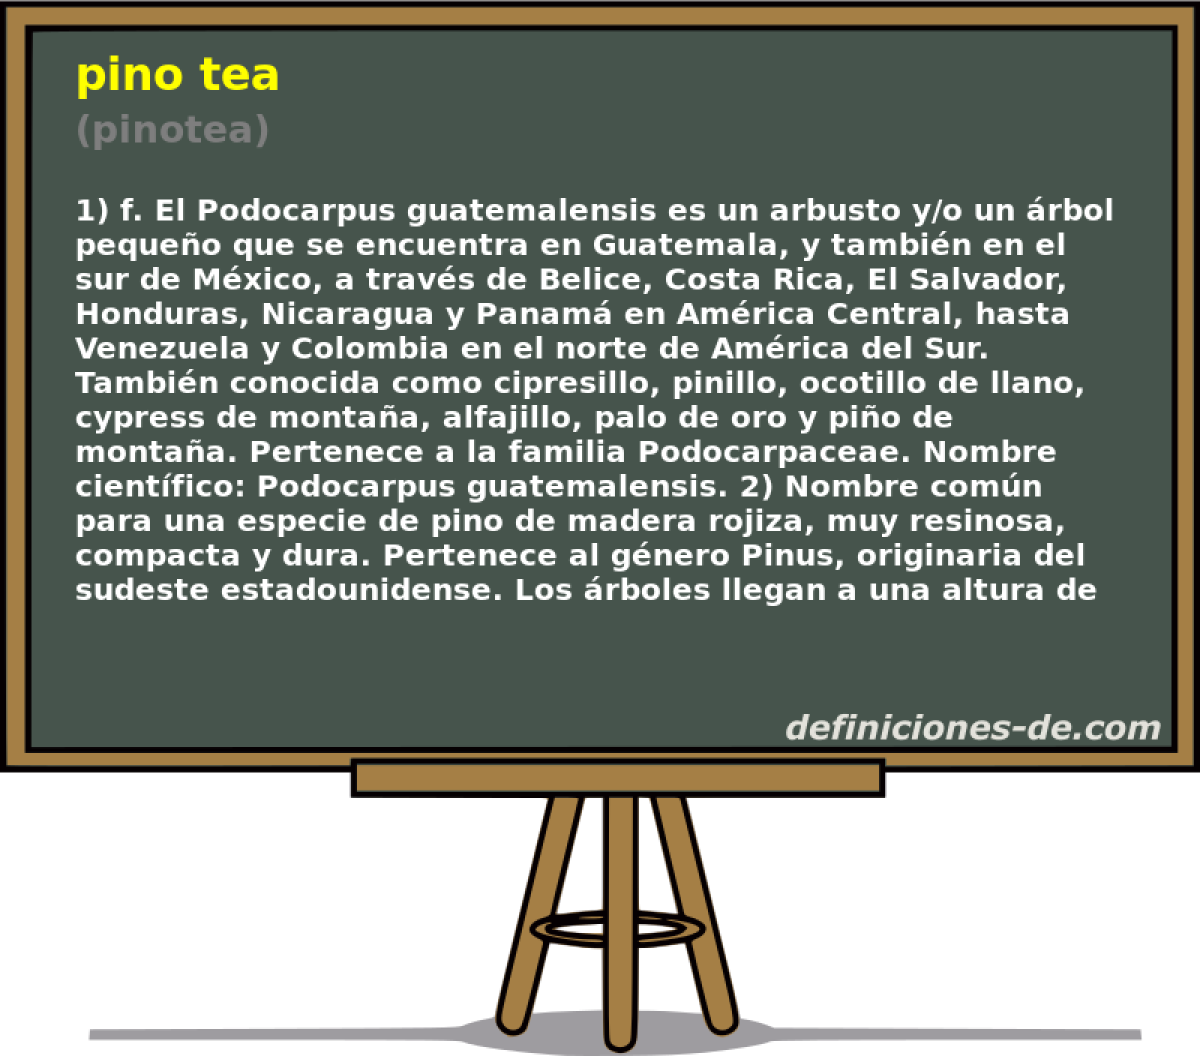 pino tea (pinotea)